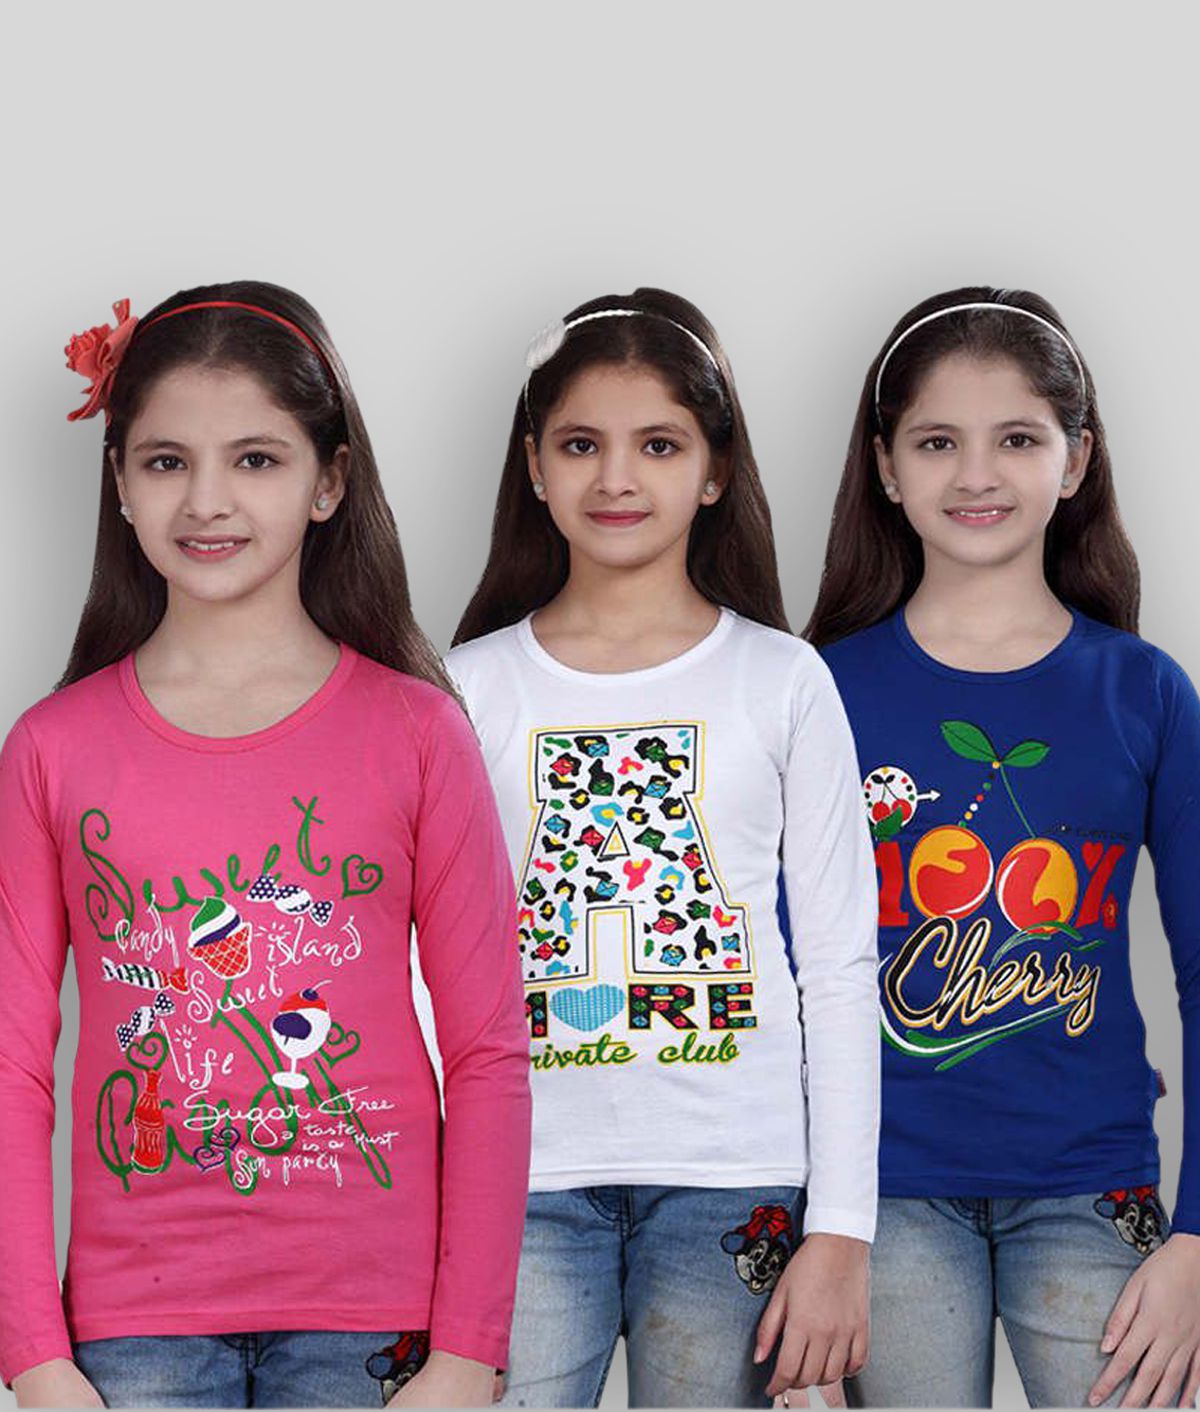     			Sini Mini - Multicolor Cotton Blend Girl's T-Shirt ( Pack of 3 )